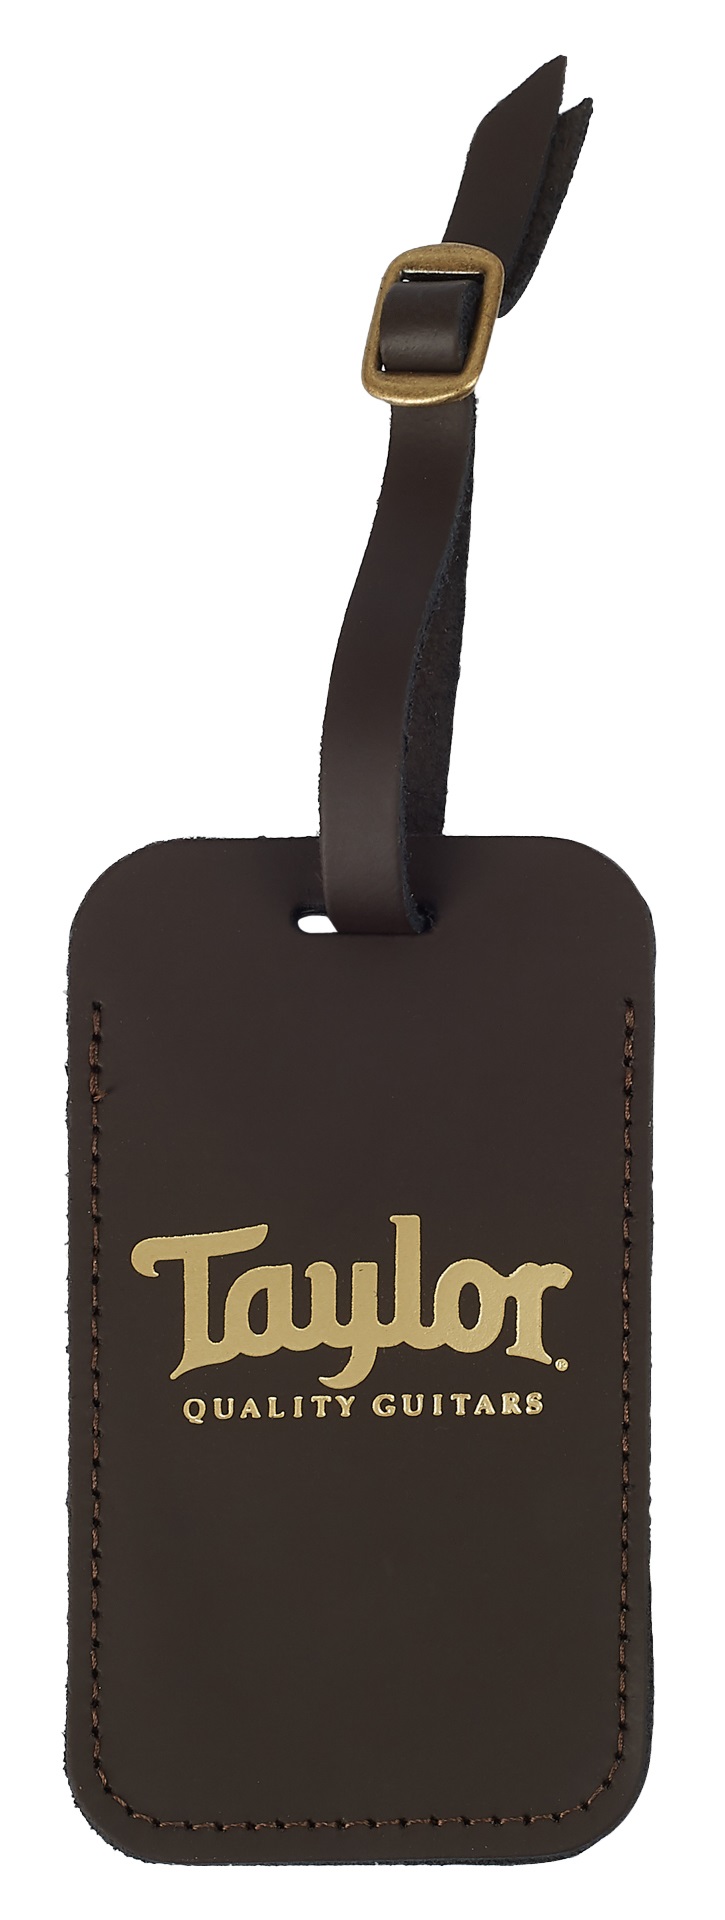 Taylor Luggage Tag